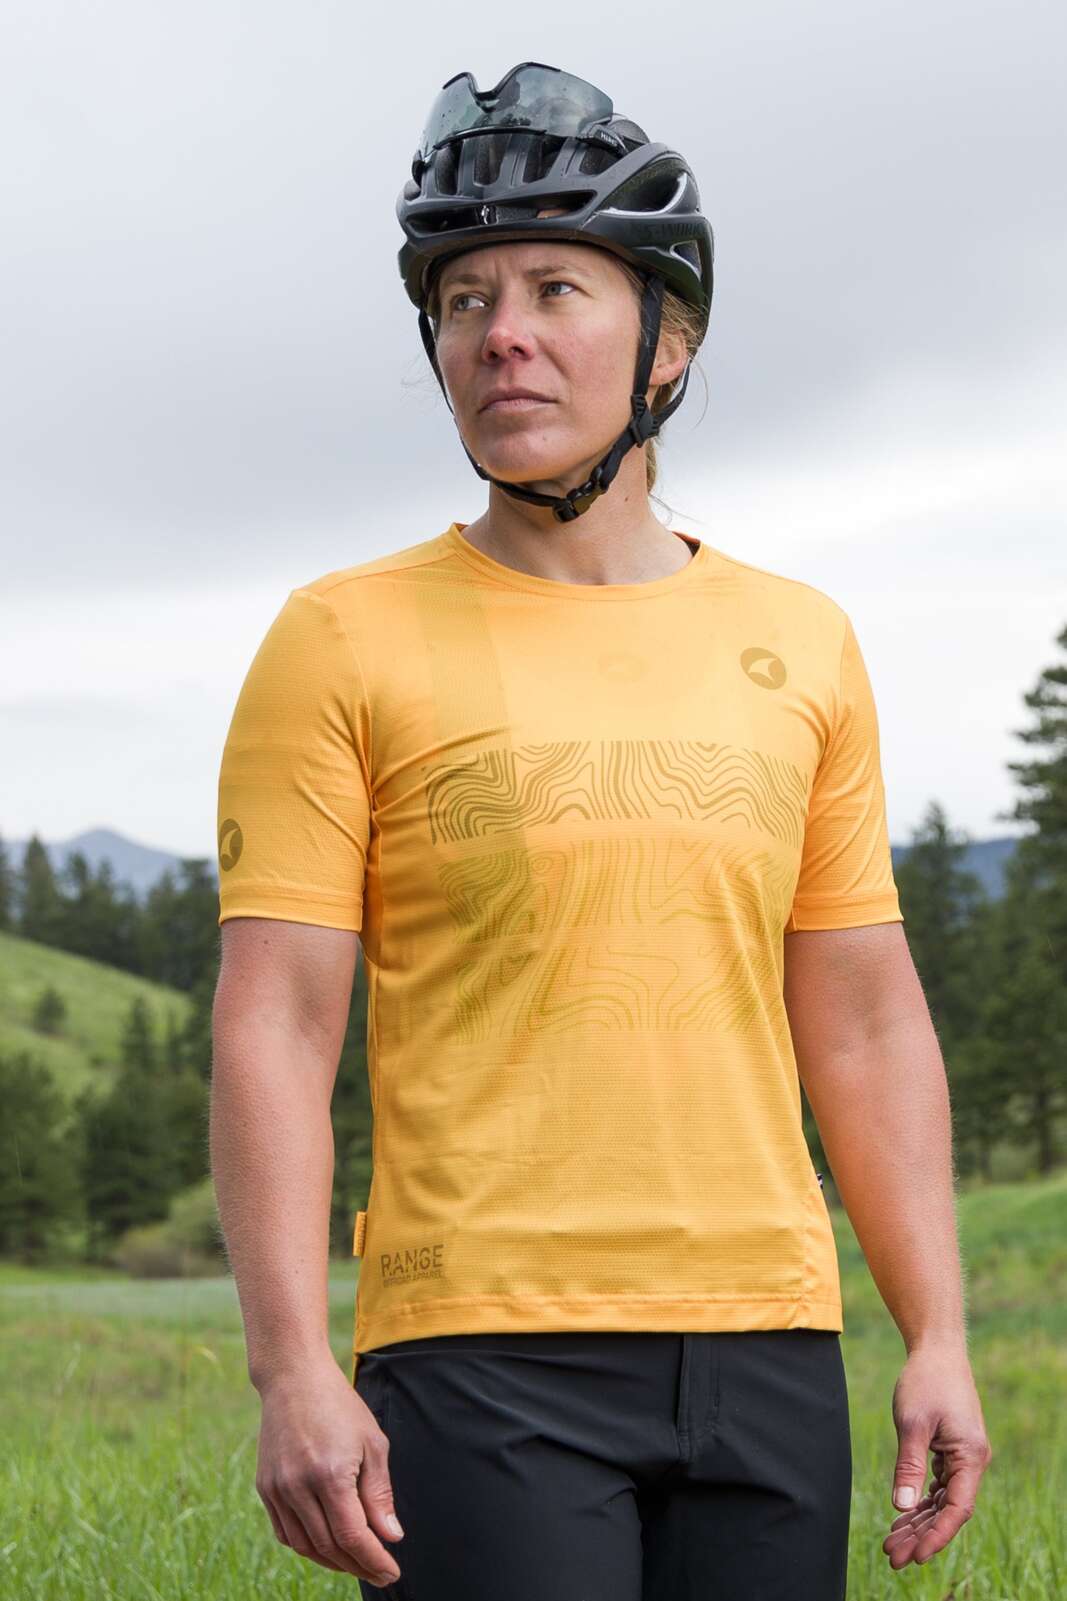 Women's Orange Mountain Bike Jerseys - Front View